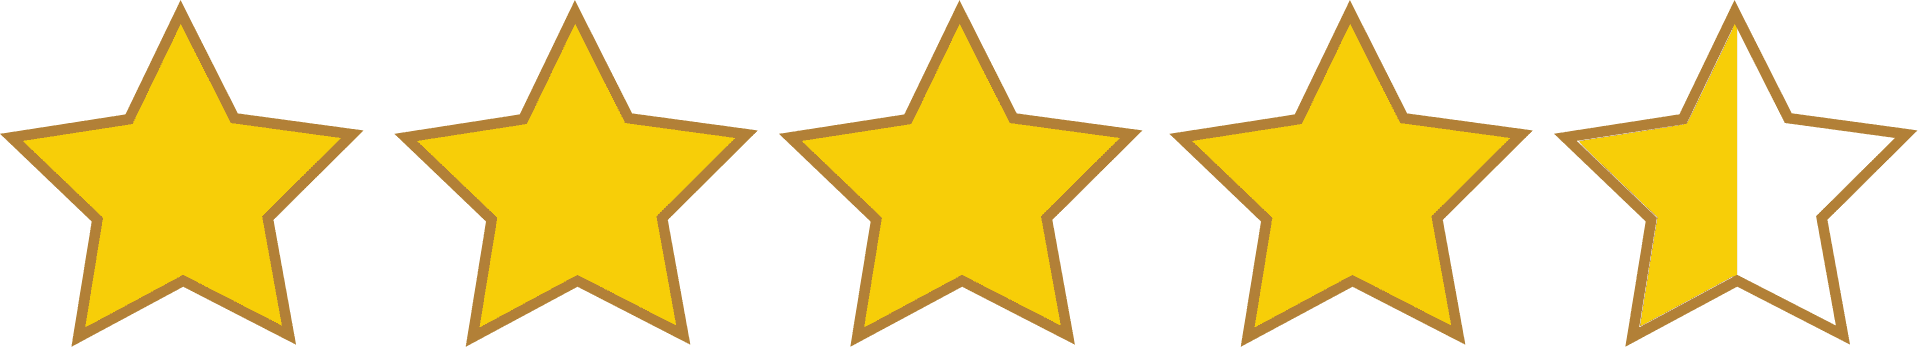 4.5 stars rating